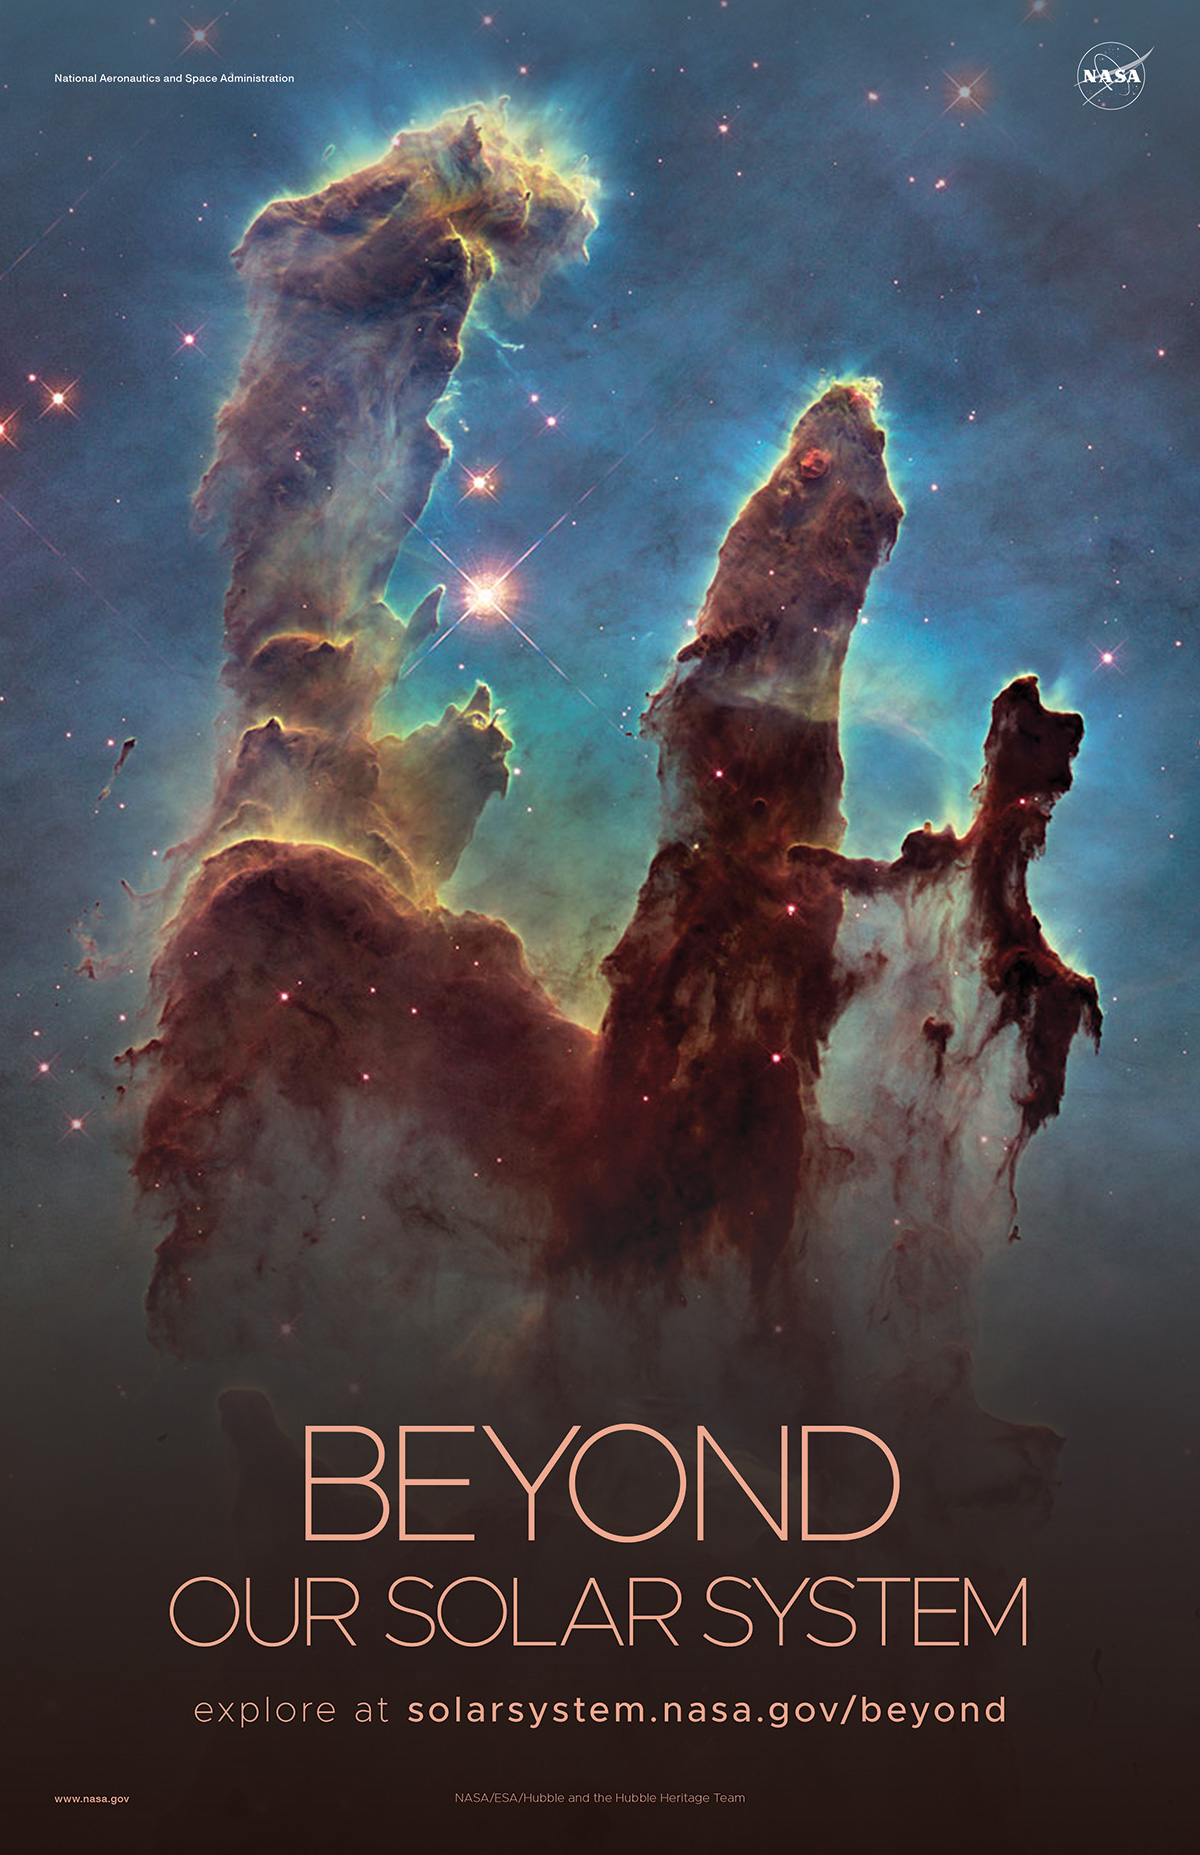 beyond-our-solar-system-poster-version-c-nasa-solar-system-exploration